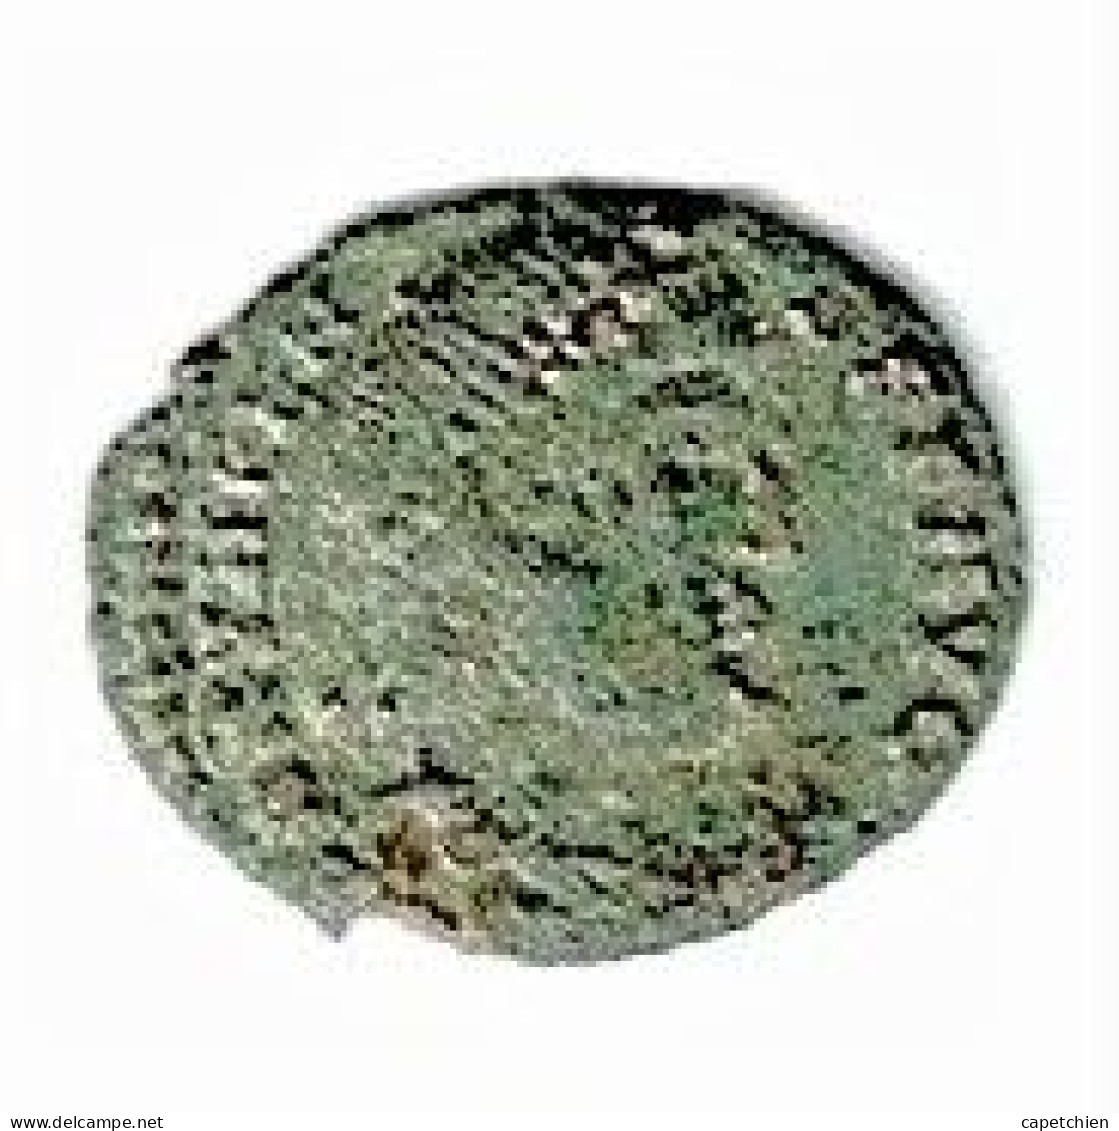 BRONZE ROMAIN A IDENTIFIER / 2.22 G - L'Empire Chrétien (307 à 363)